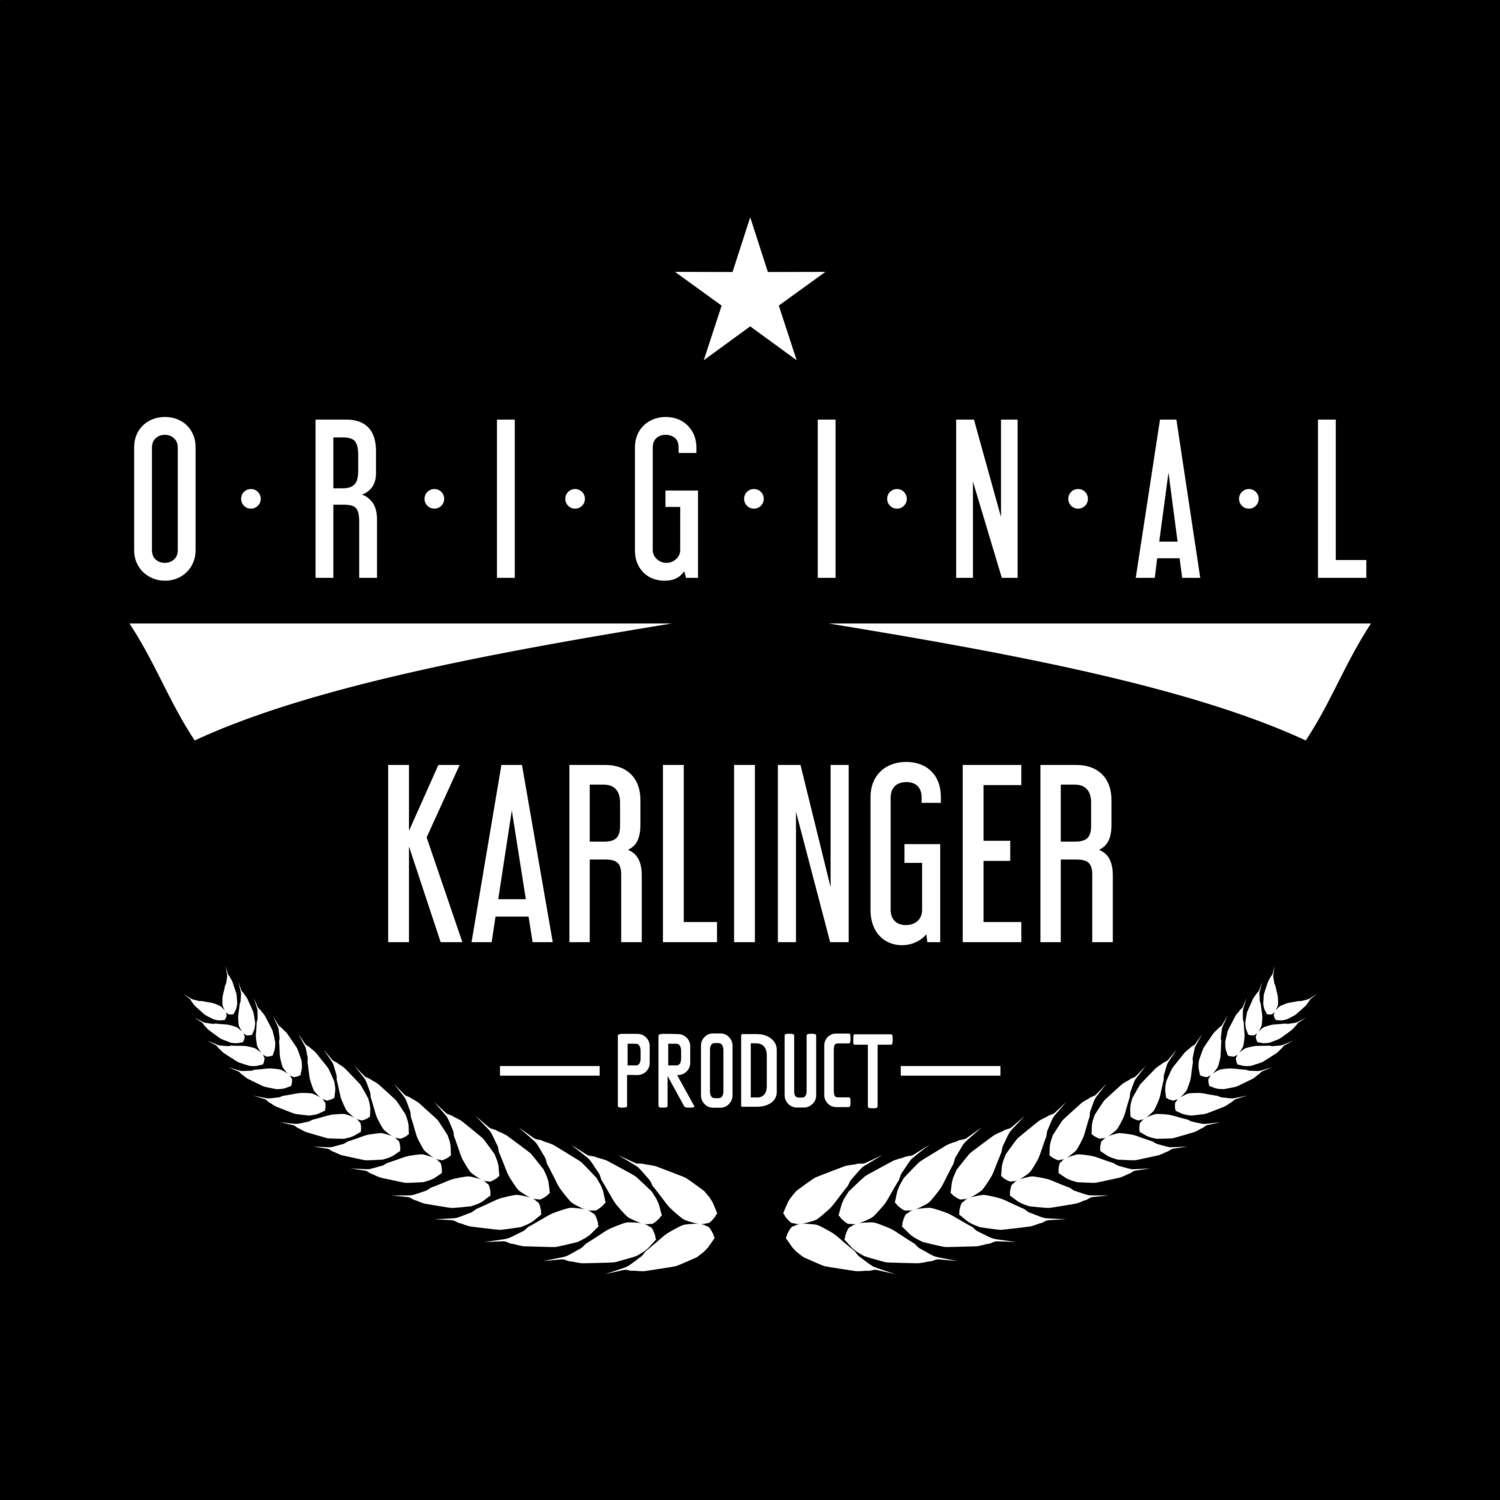 Karlinger T-Shirt »Original Product«